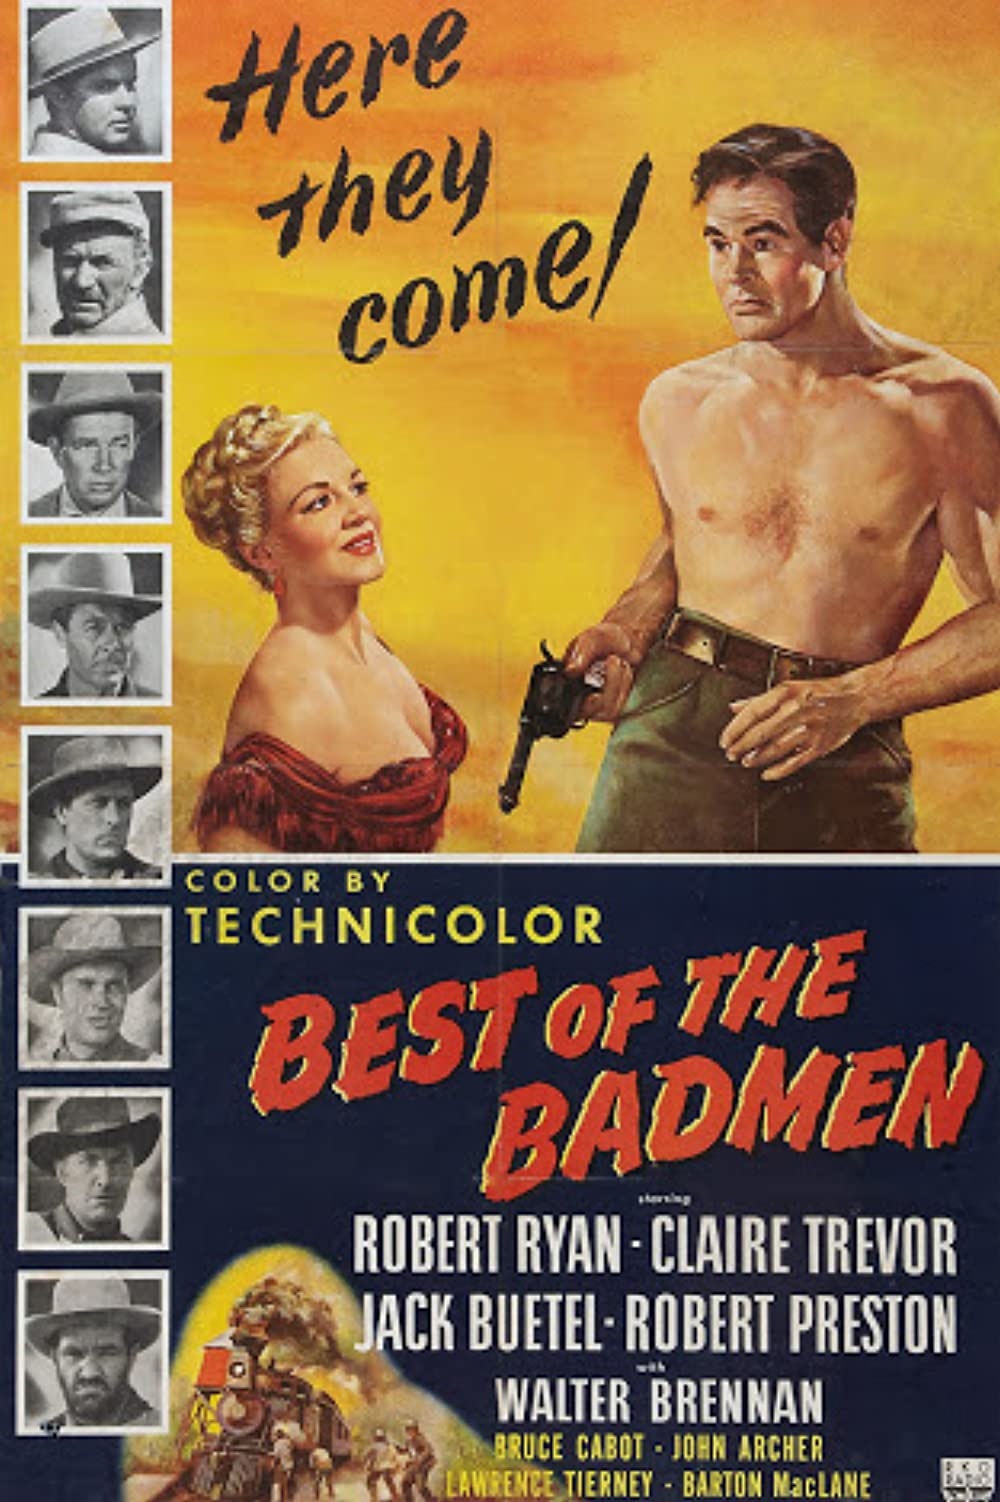 BEST OF THE BADMAN (1951) western